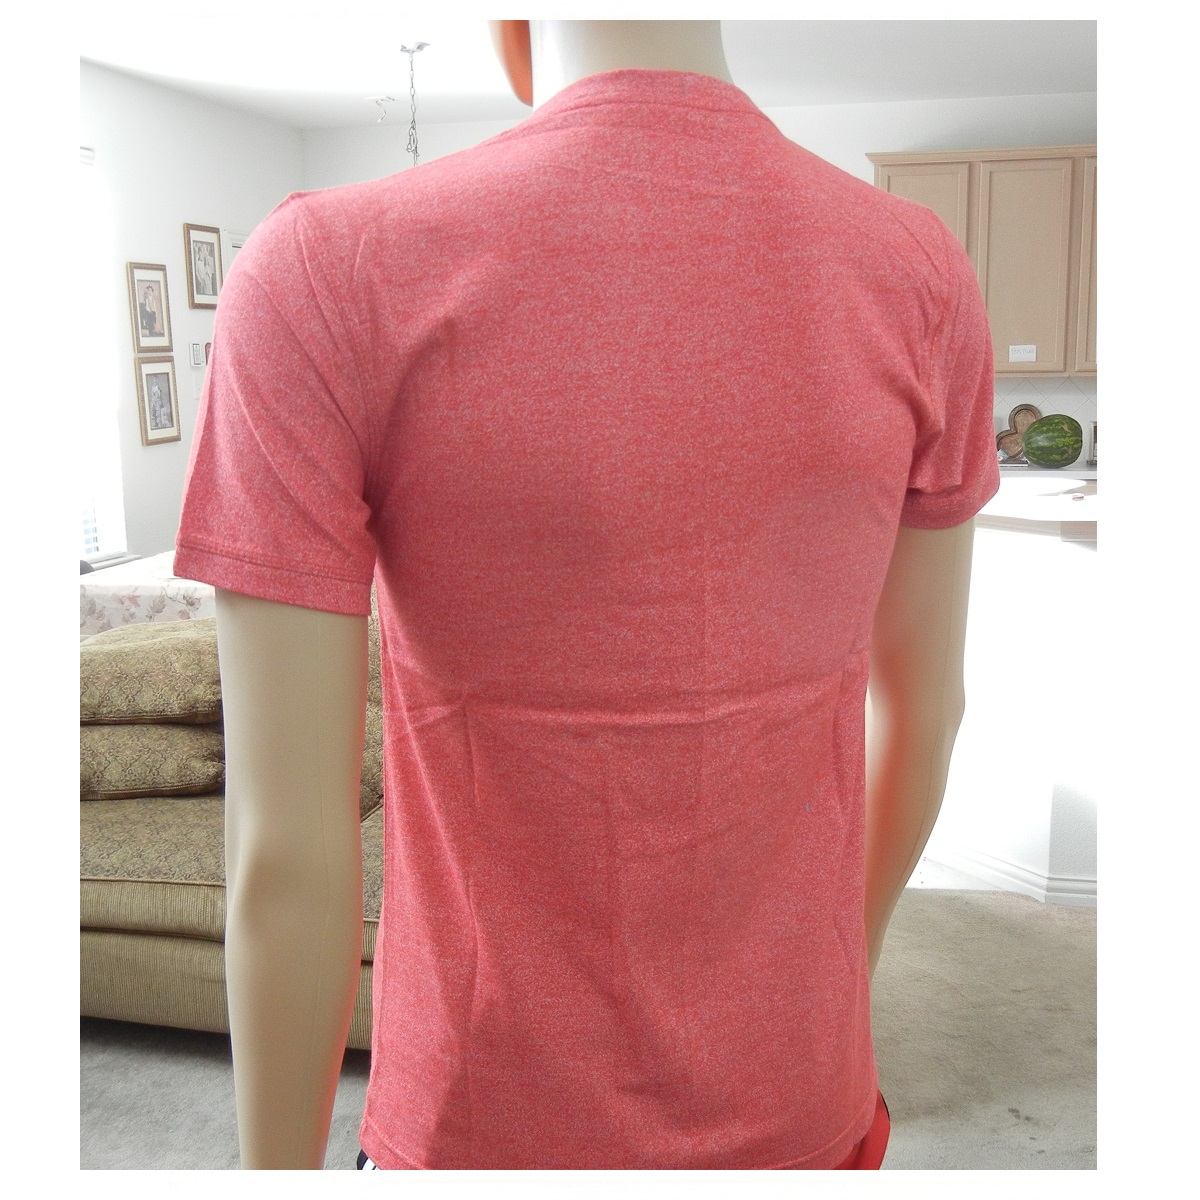 Men's T-Shirt, Short Sleeve V-Neck Cotton T-Shirt Basic Plain T-Shirt for men, Heather pink